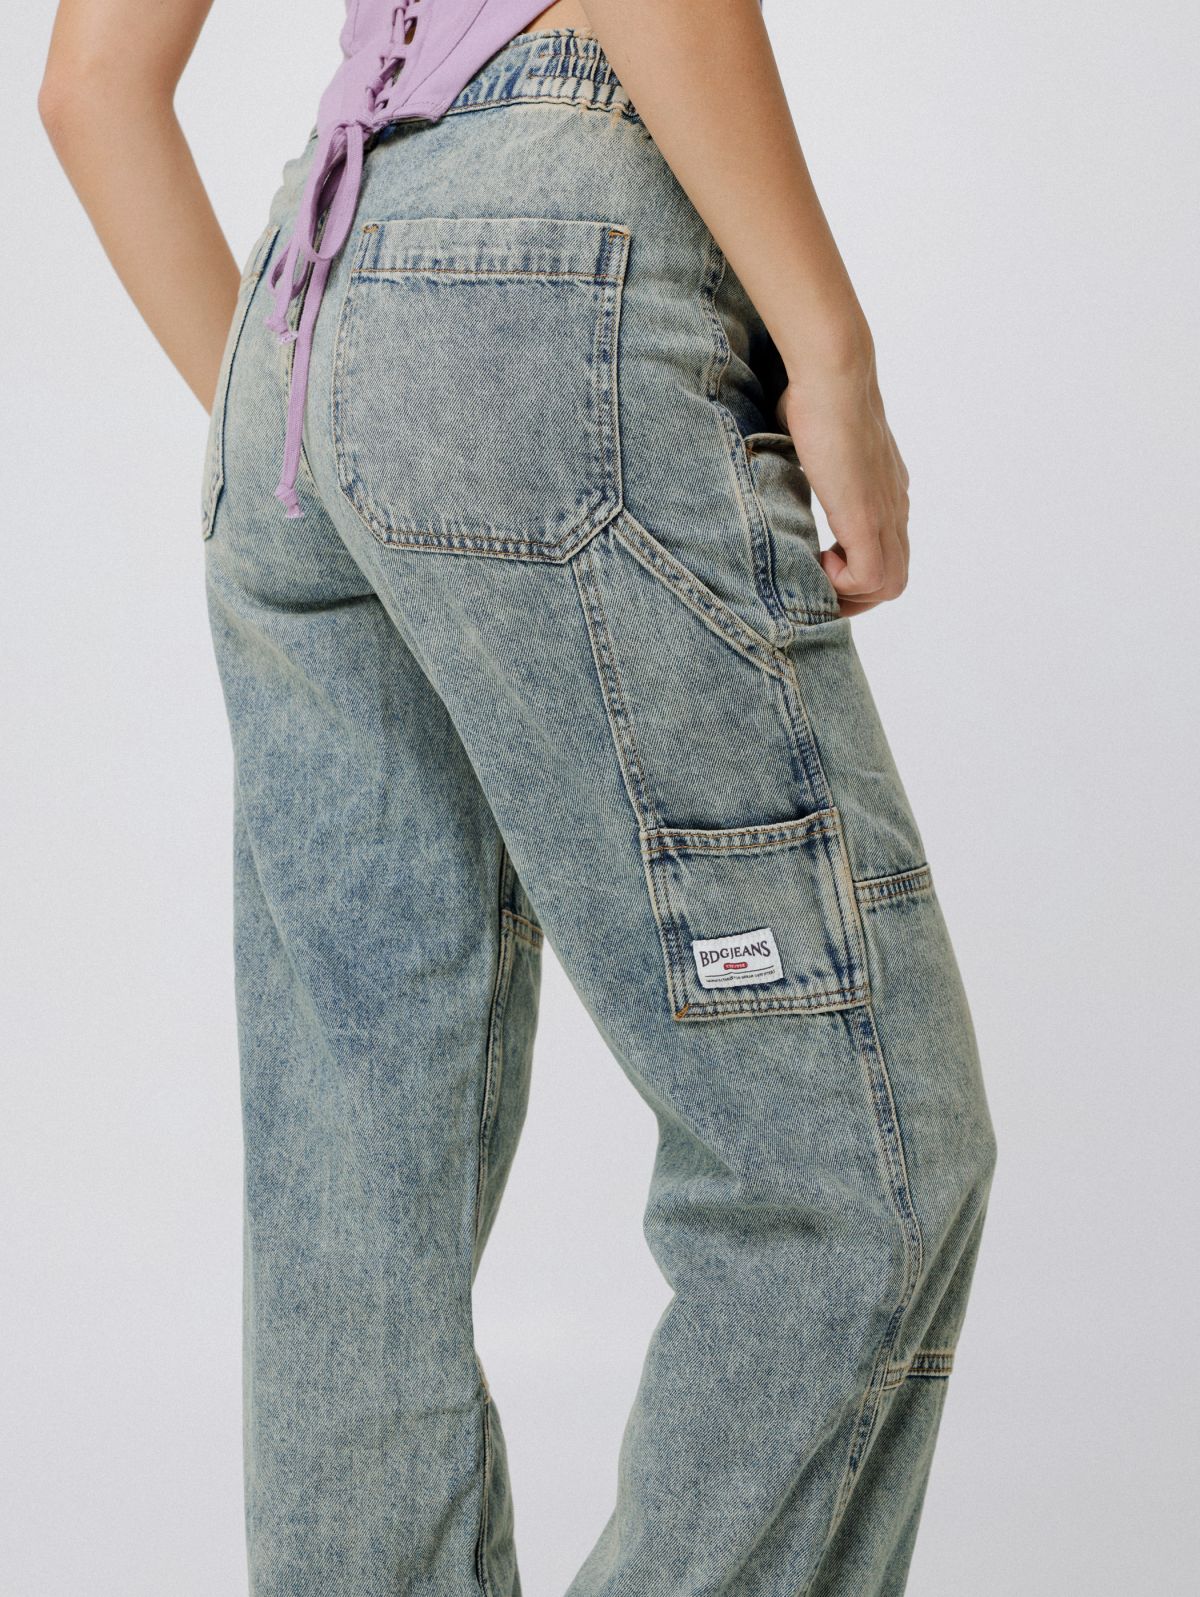  ג'ינס ווש קרגו של URBAN OUTFITTERS